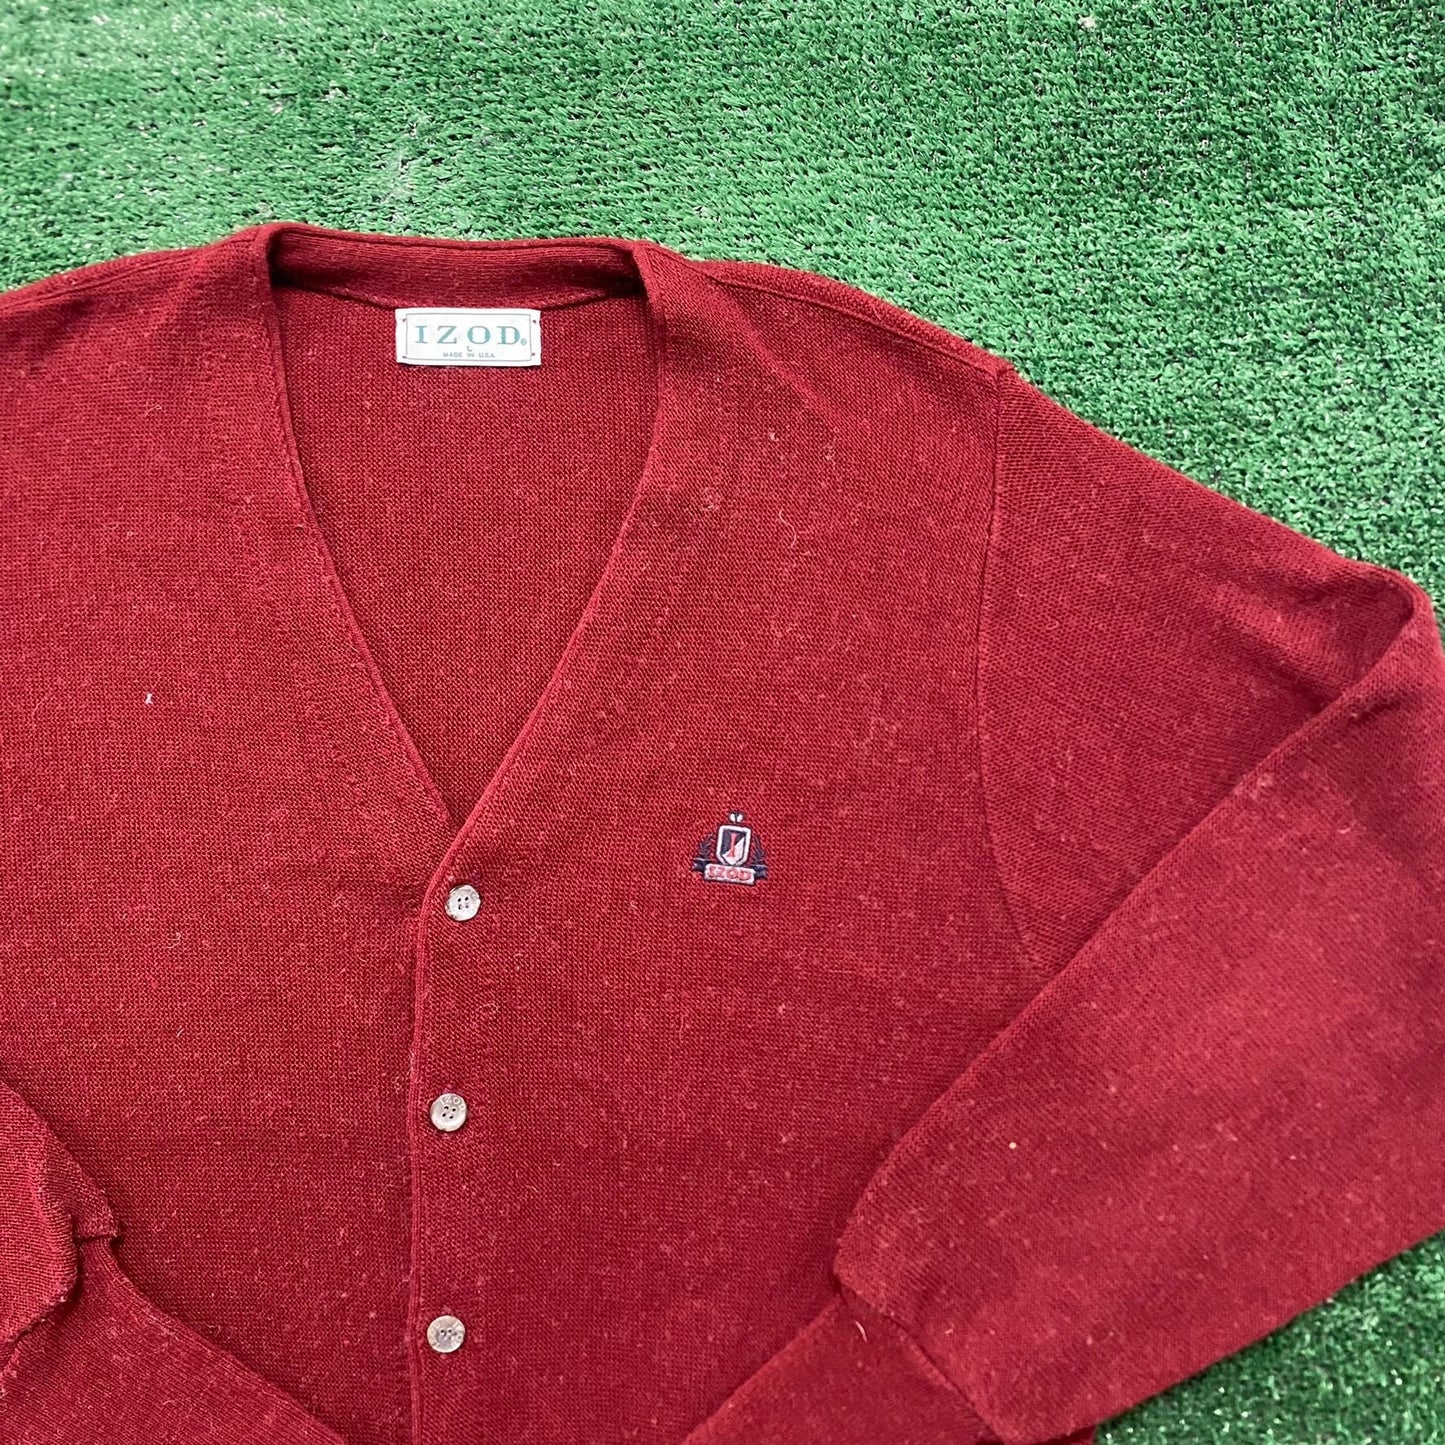 Vintage 80s IZOD Cardigan Essential Preppy Knit Sweater